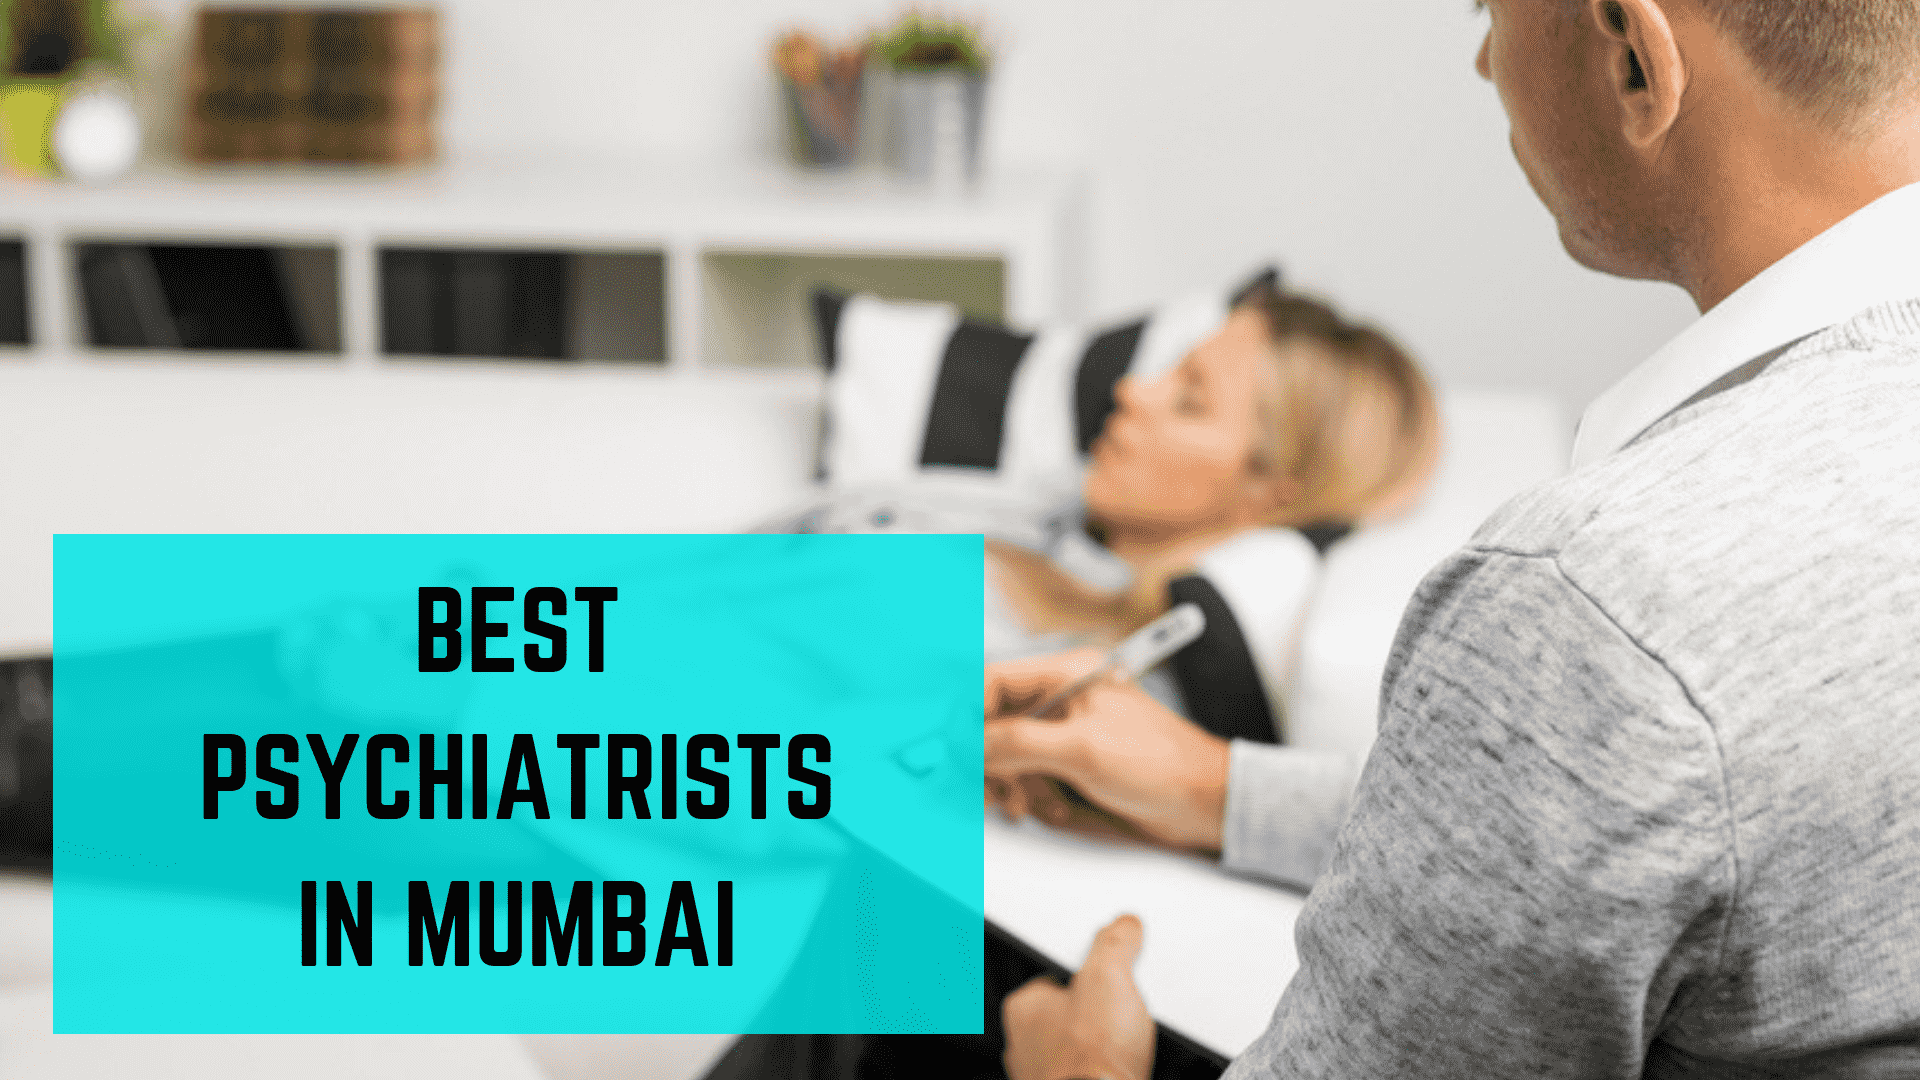 Best Psychiatrist in Mumbai for Depression - Mumbai Health, Personal Trainer